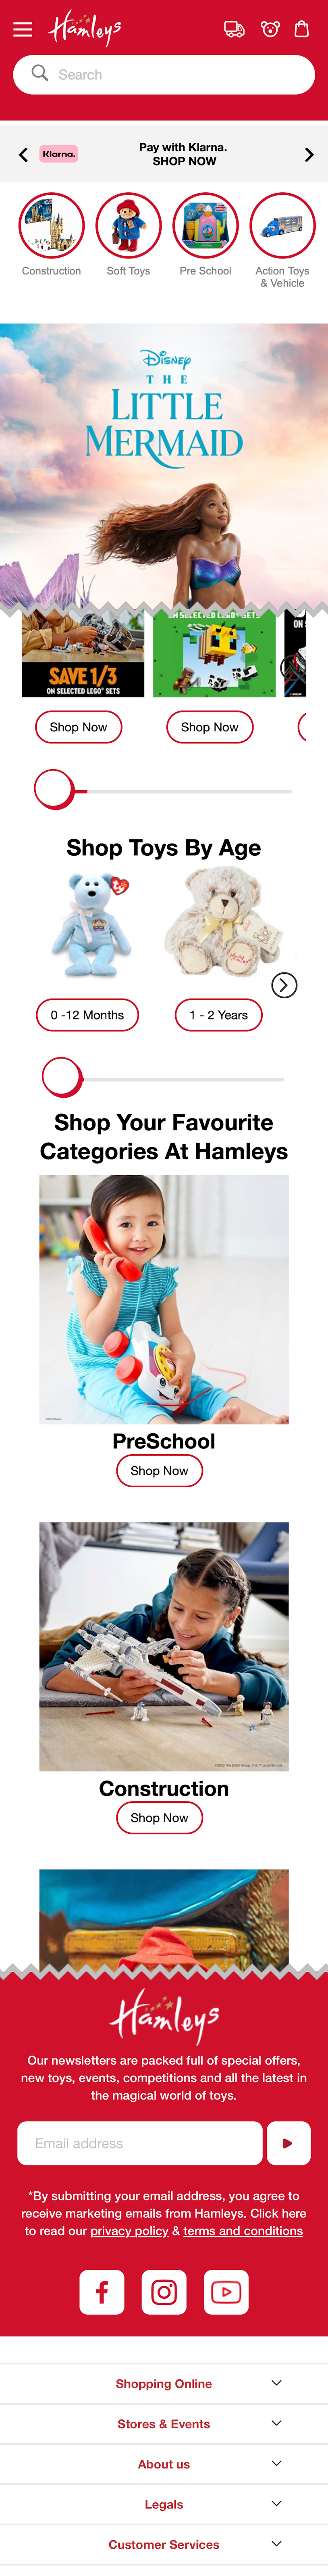 Mobile screenshot of Hamleys